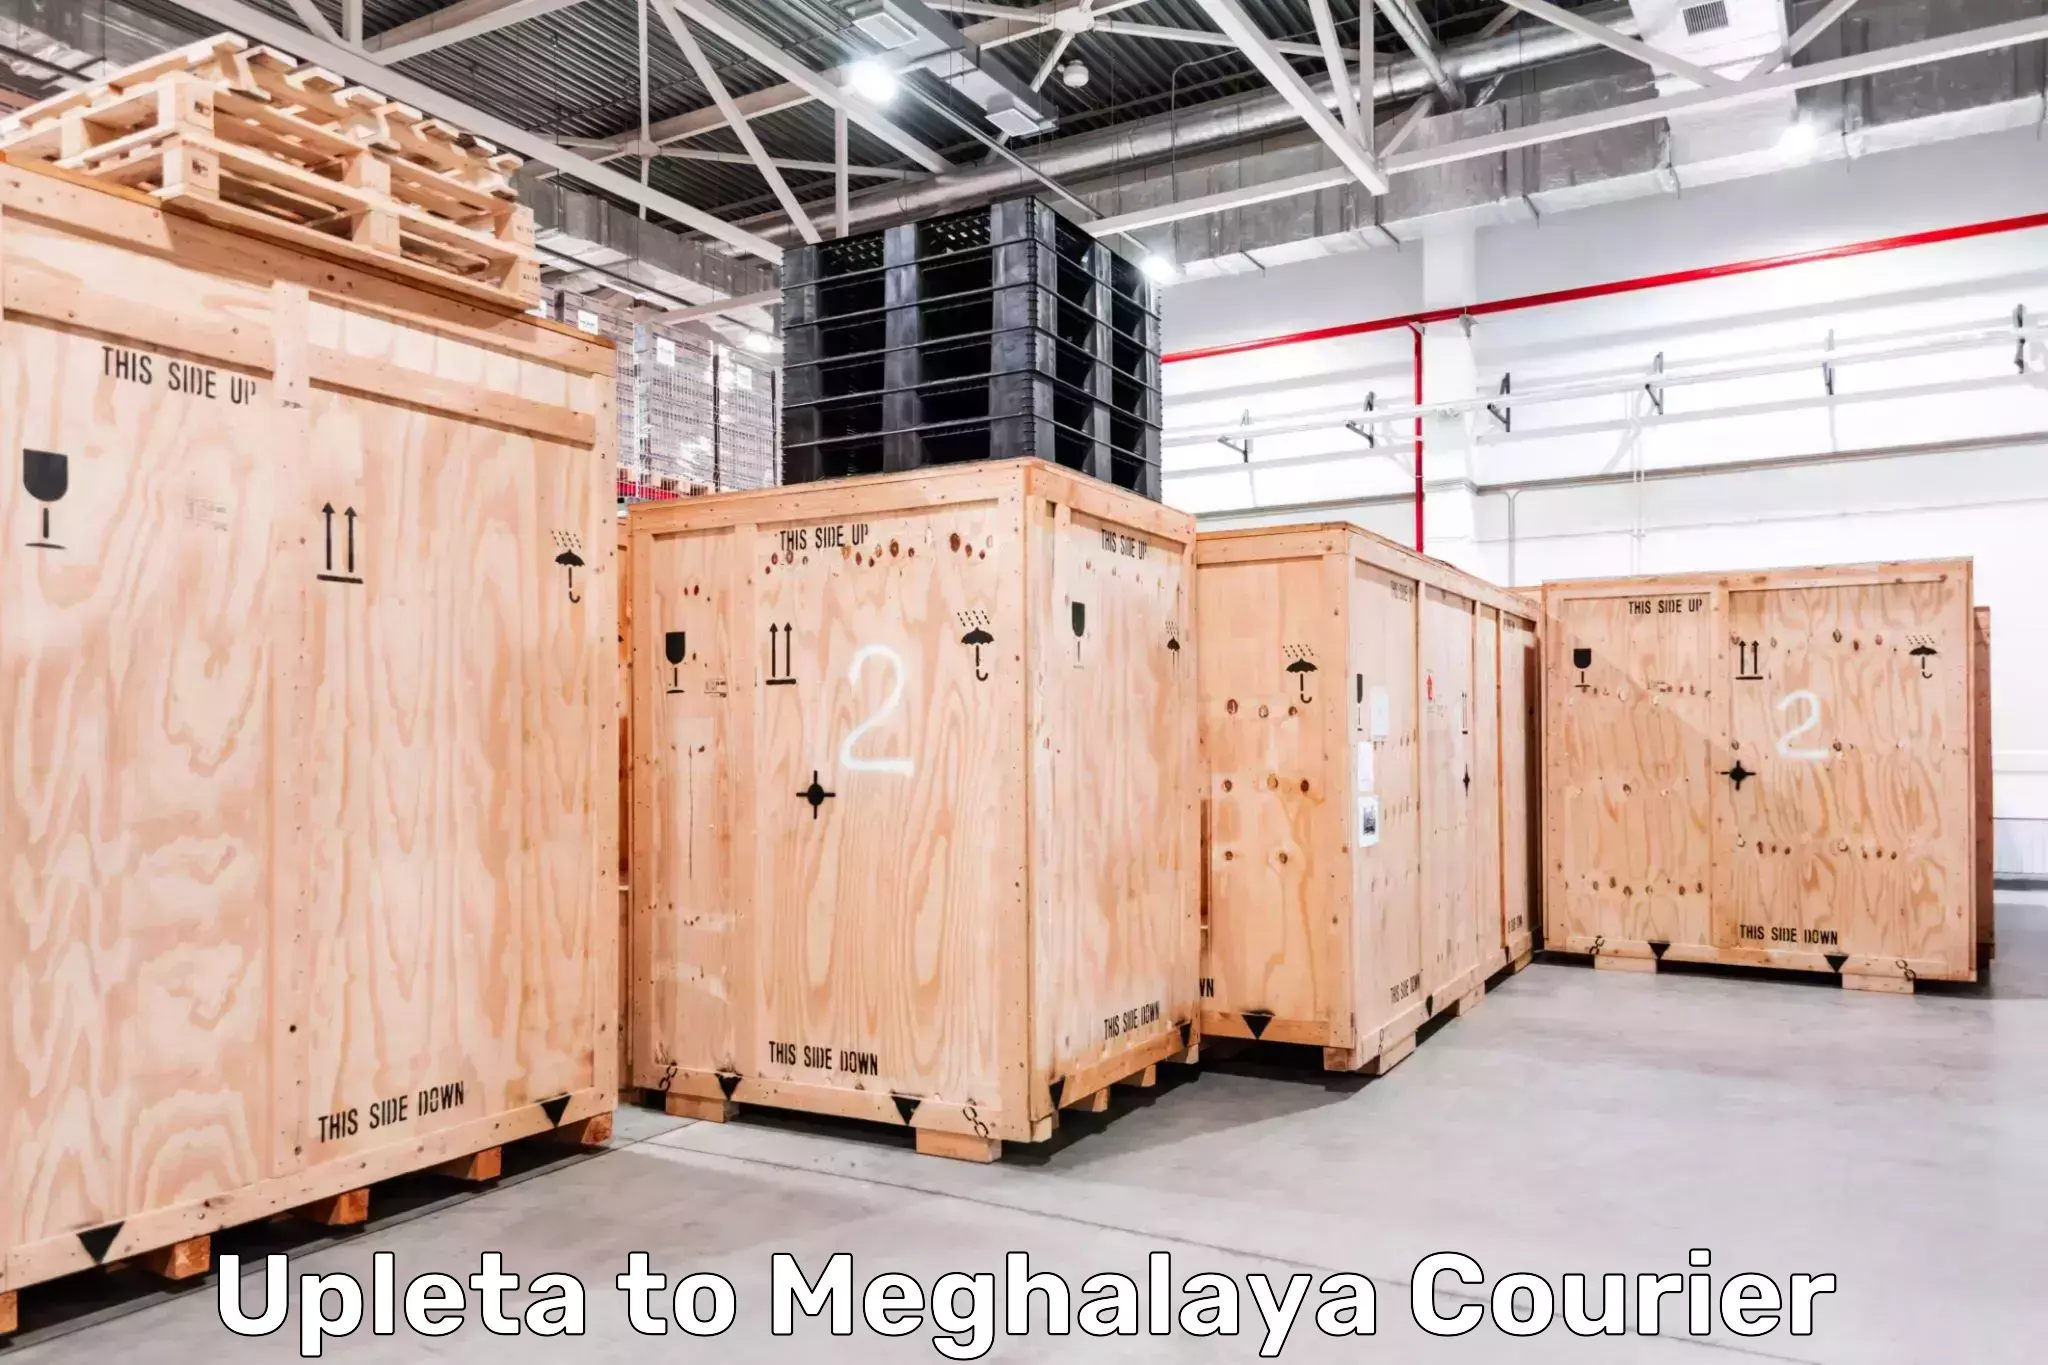 Advanced courier platforms Upleta to Meghalaya